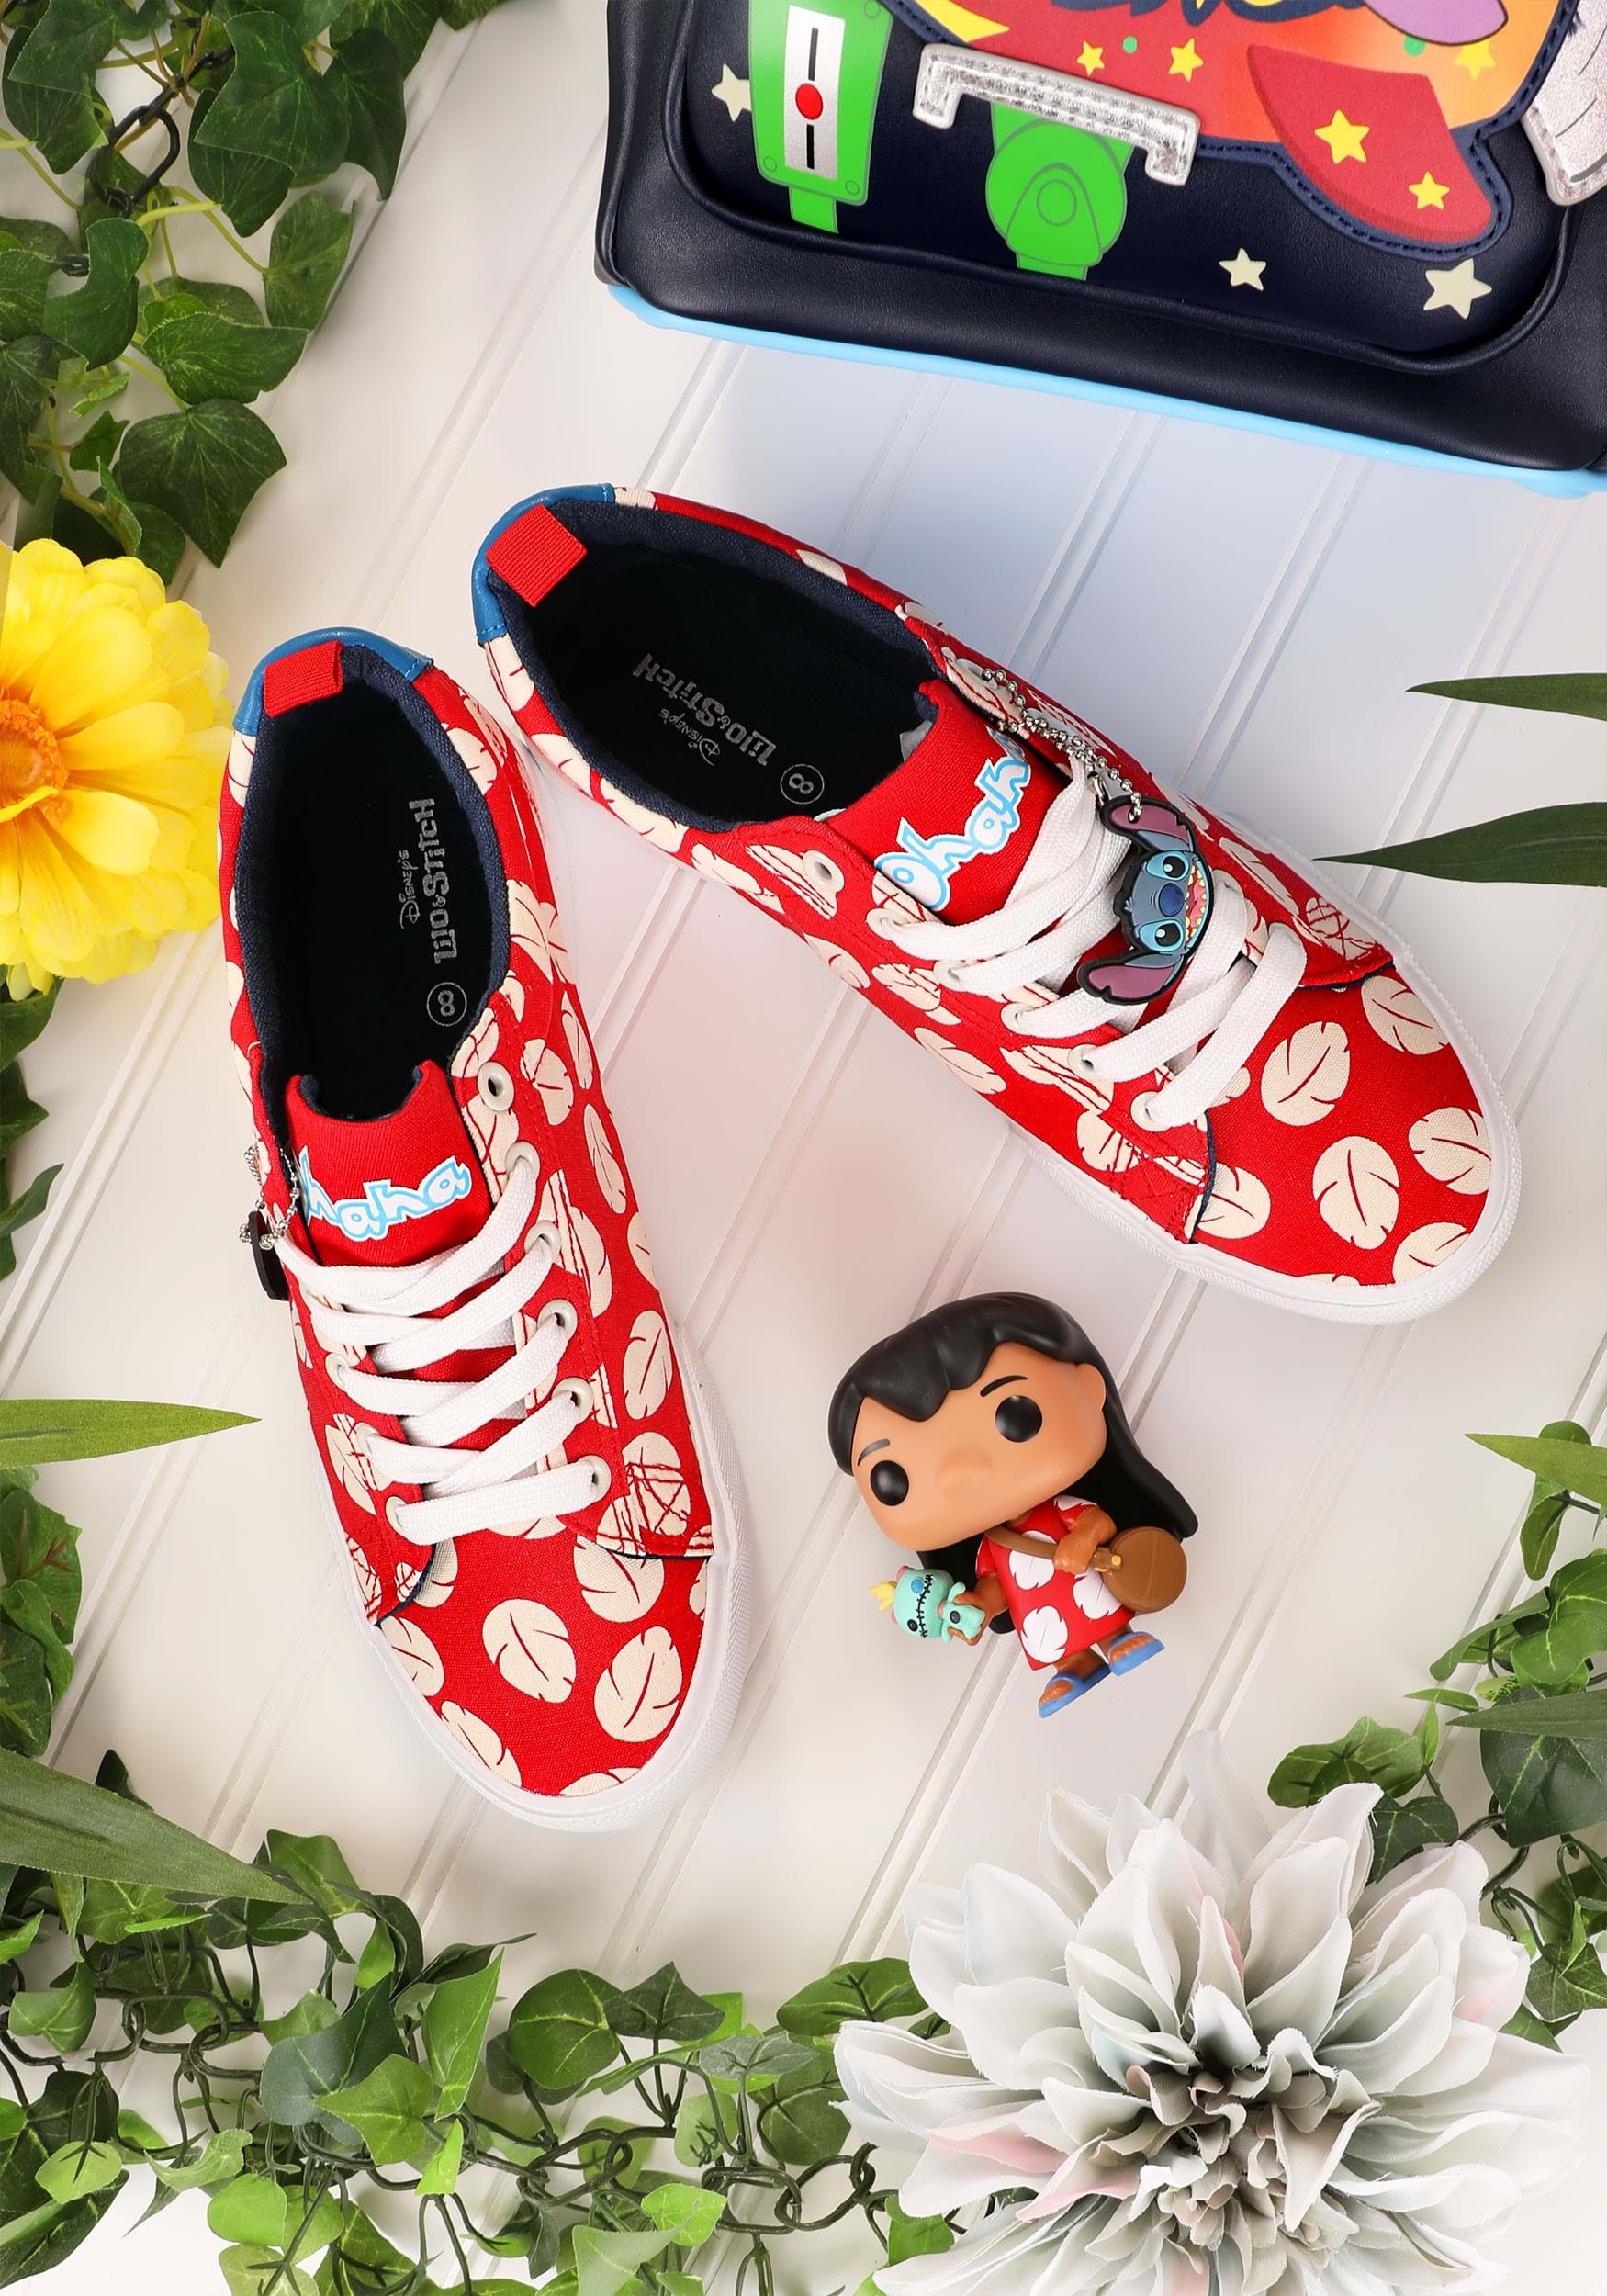 Disney Lilo & Stitch Lilo Low-Top Shoes